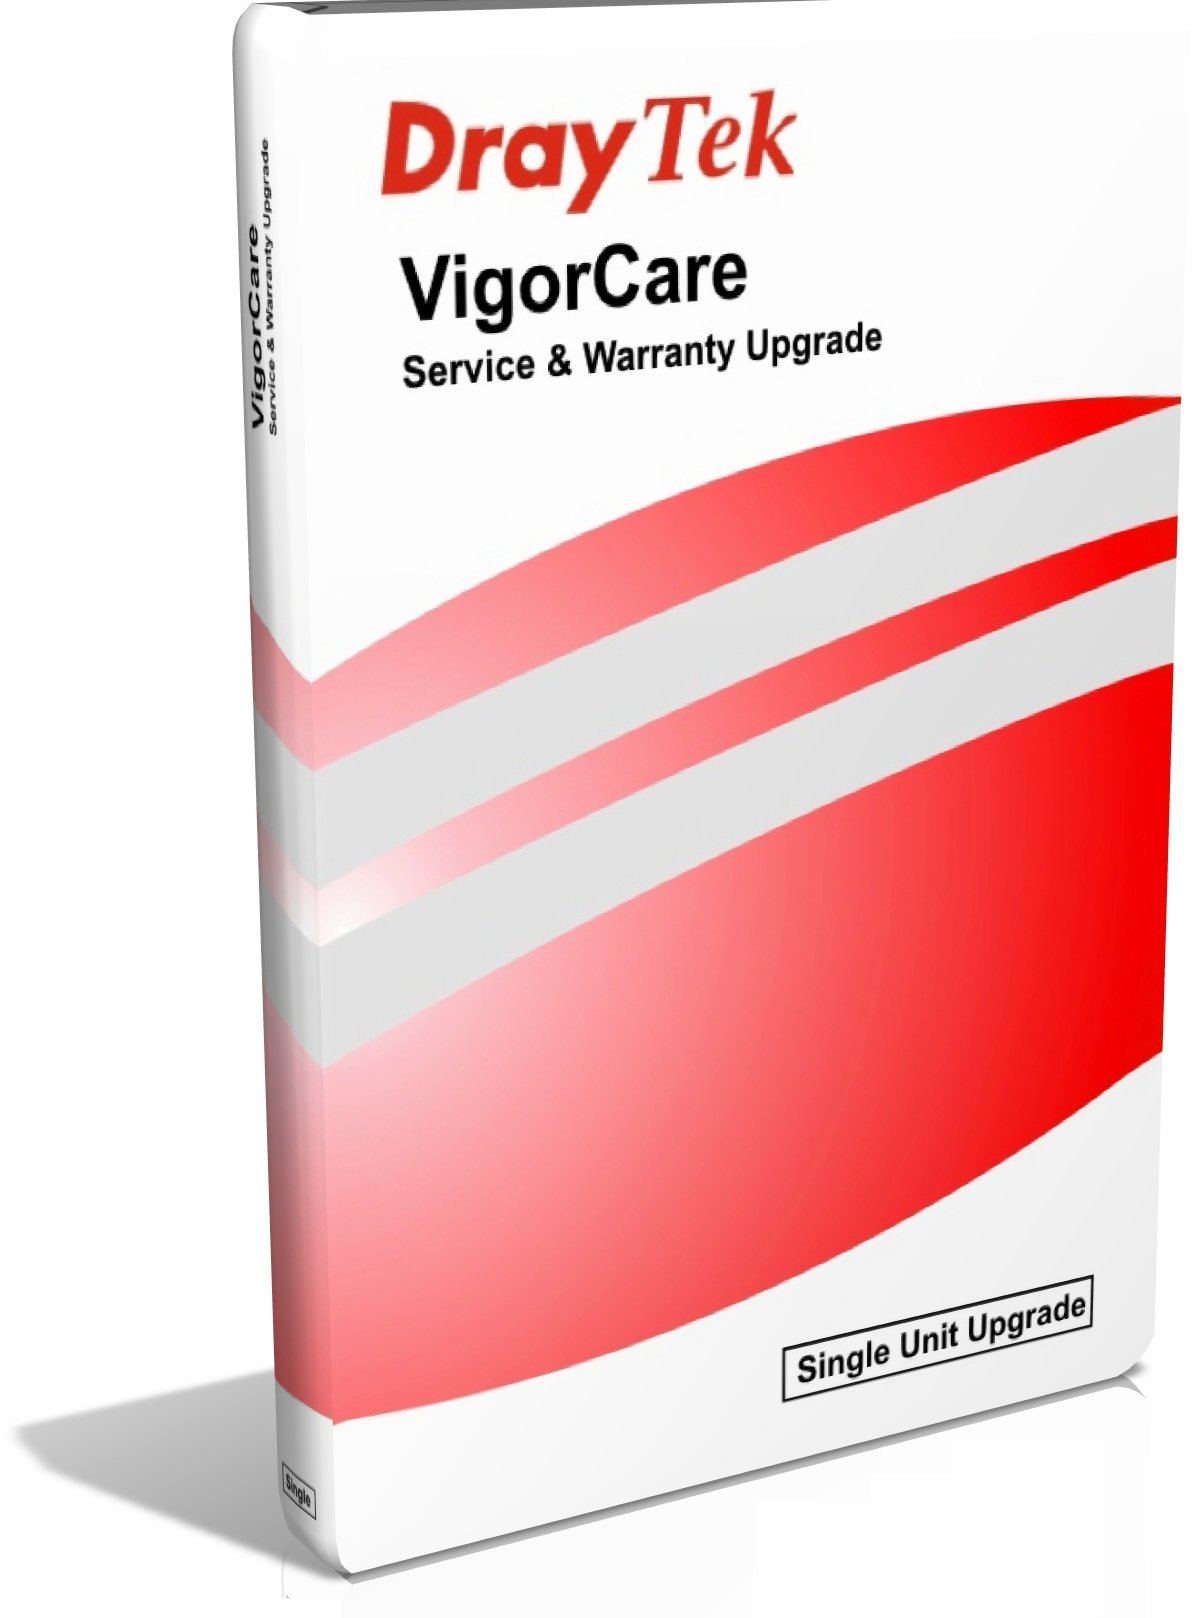 DrayTek VigorCare Extended Warranty A3 3 Year Care Package